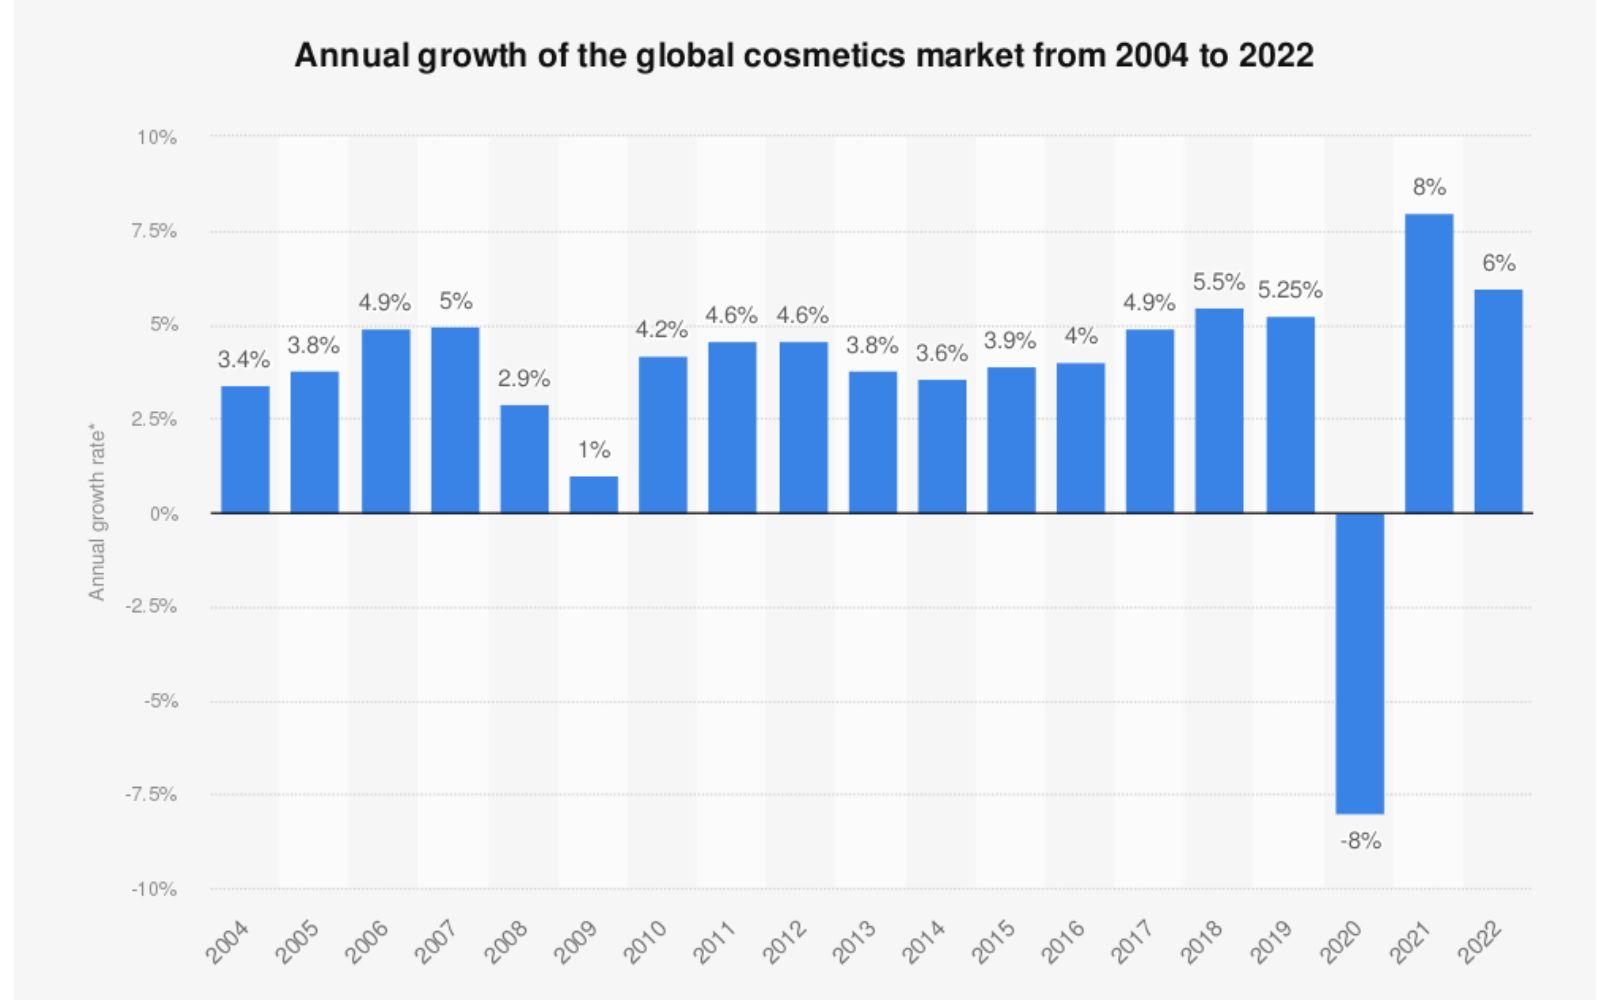 Global cosmetics market growth